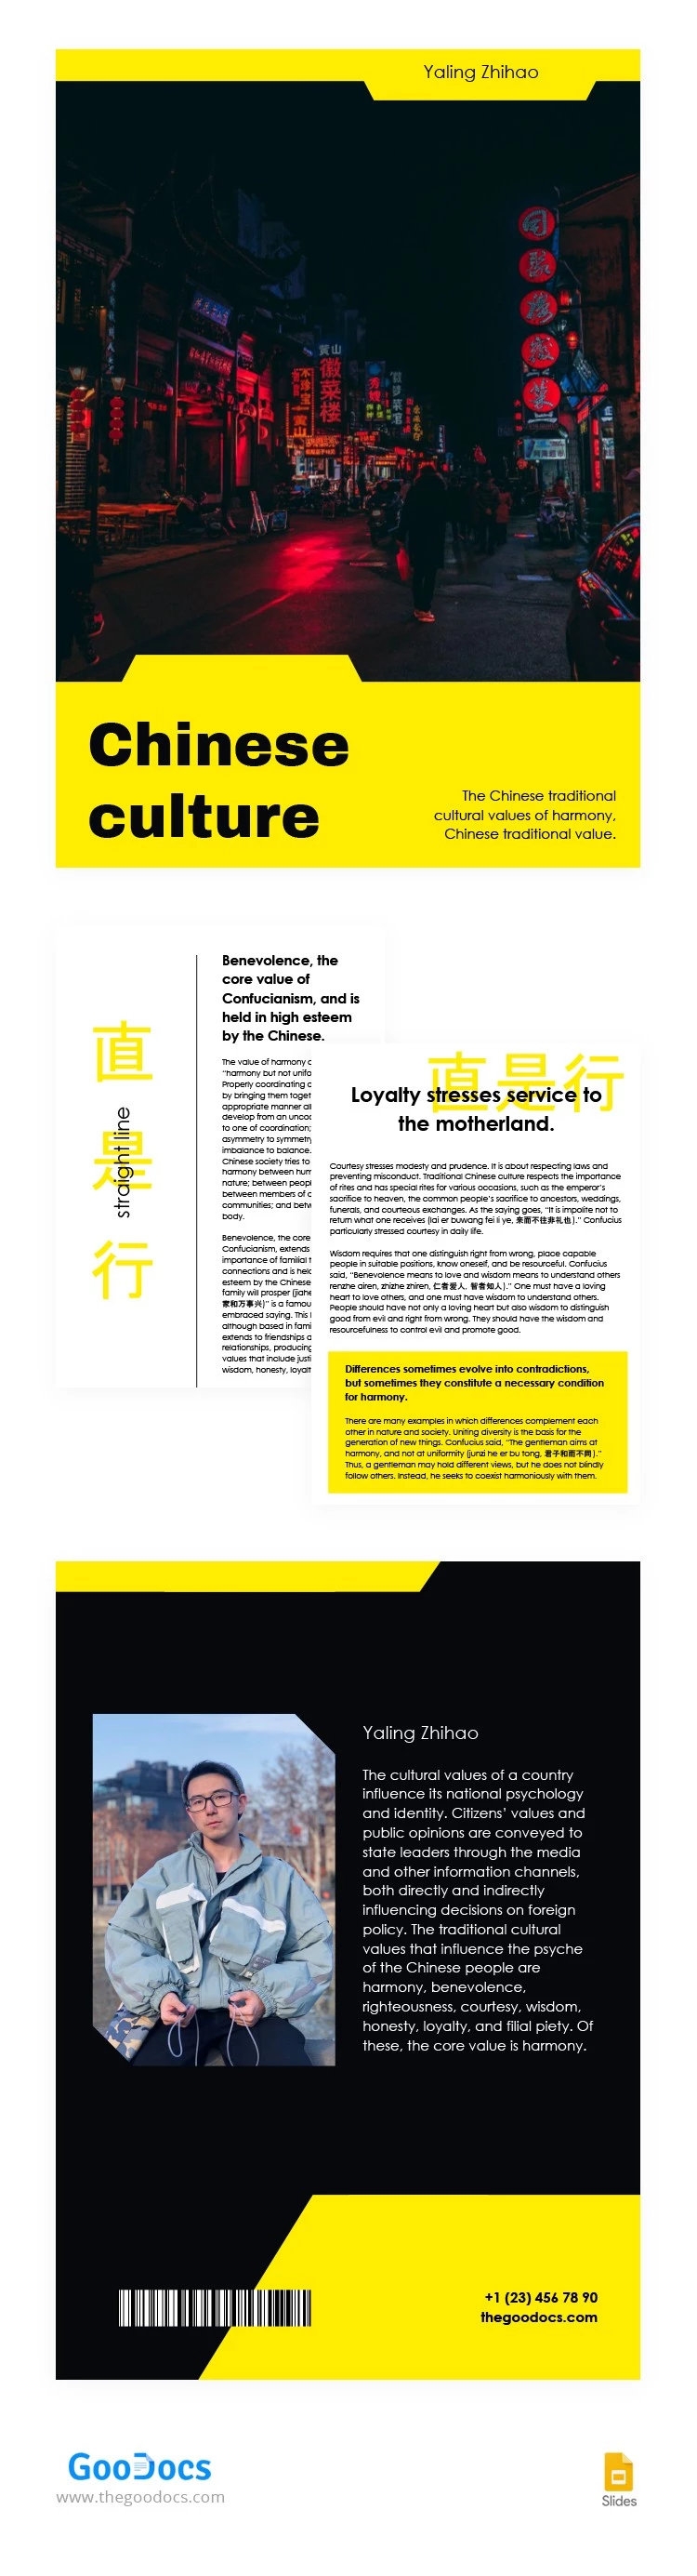 Livro sobre a Cultura Chinesa - free Google Docs Template - 10063612